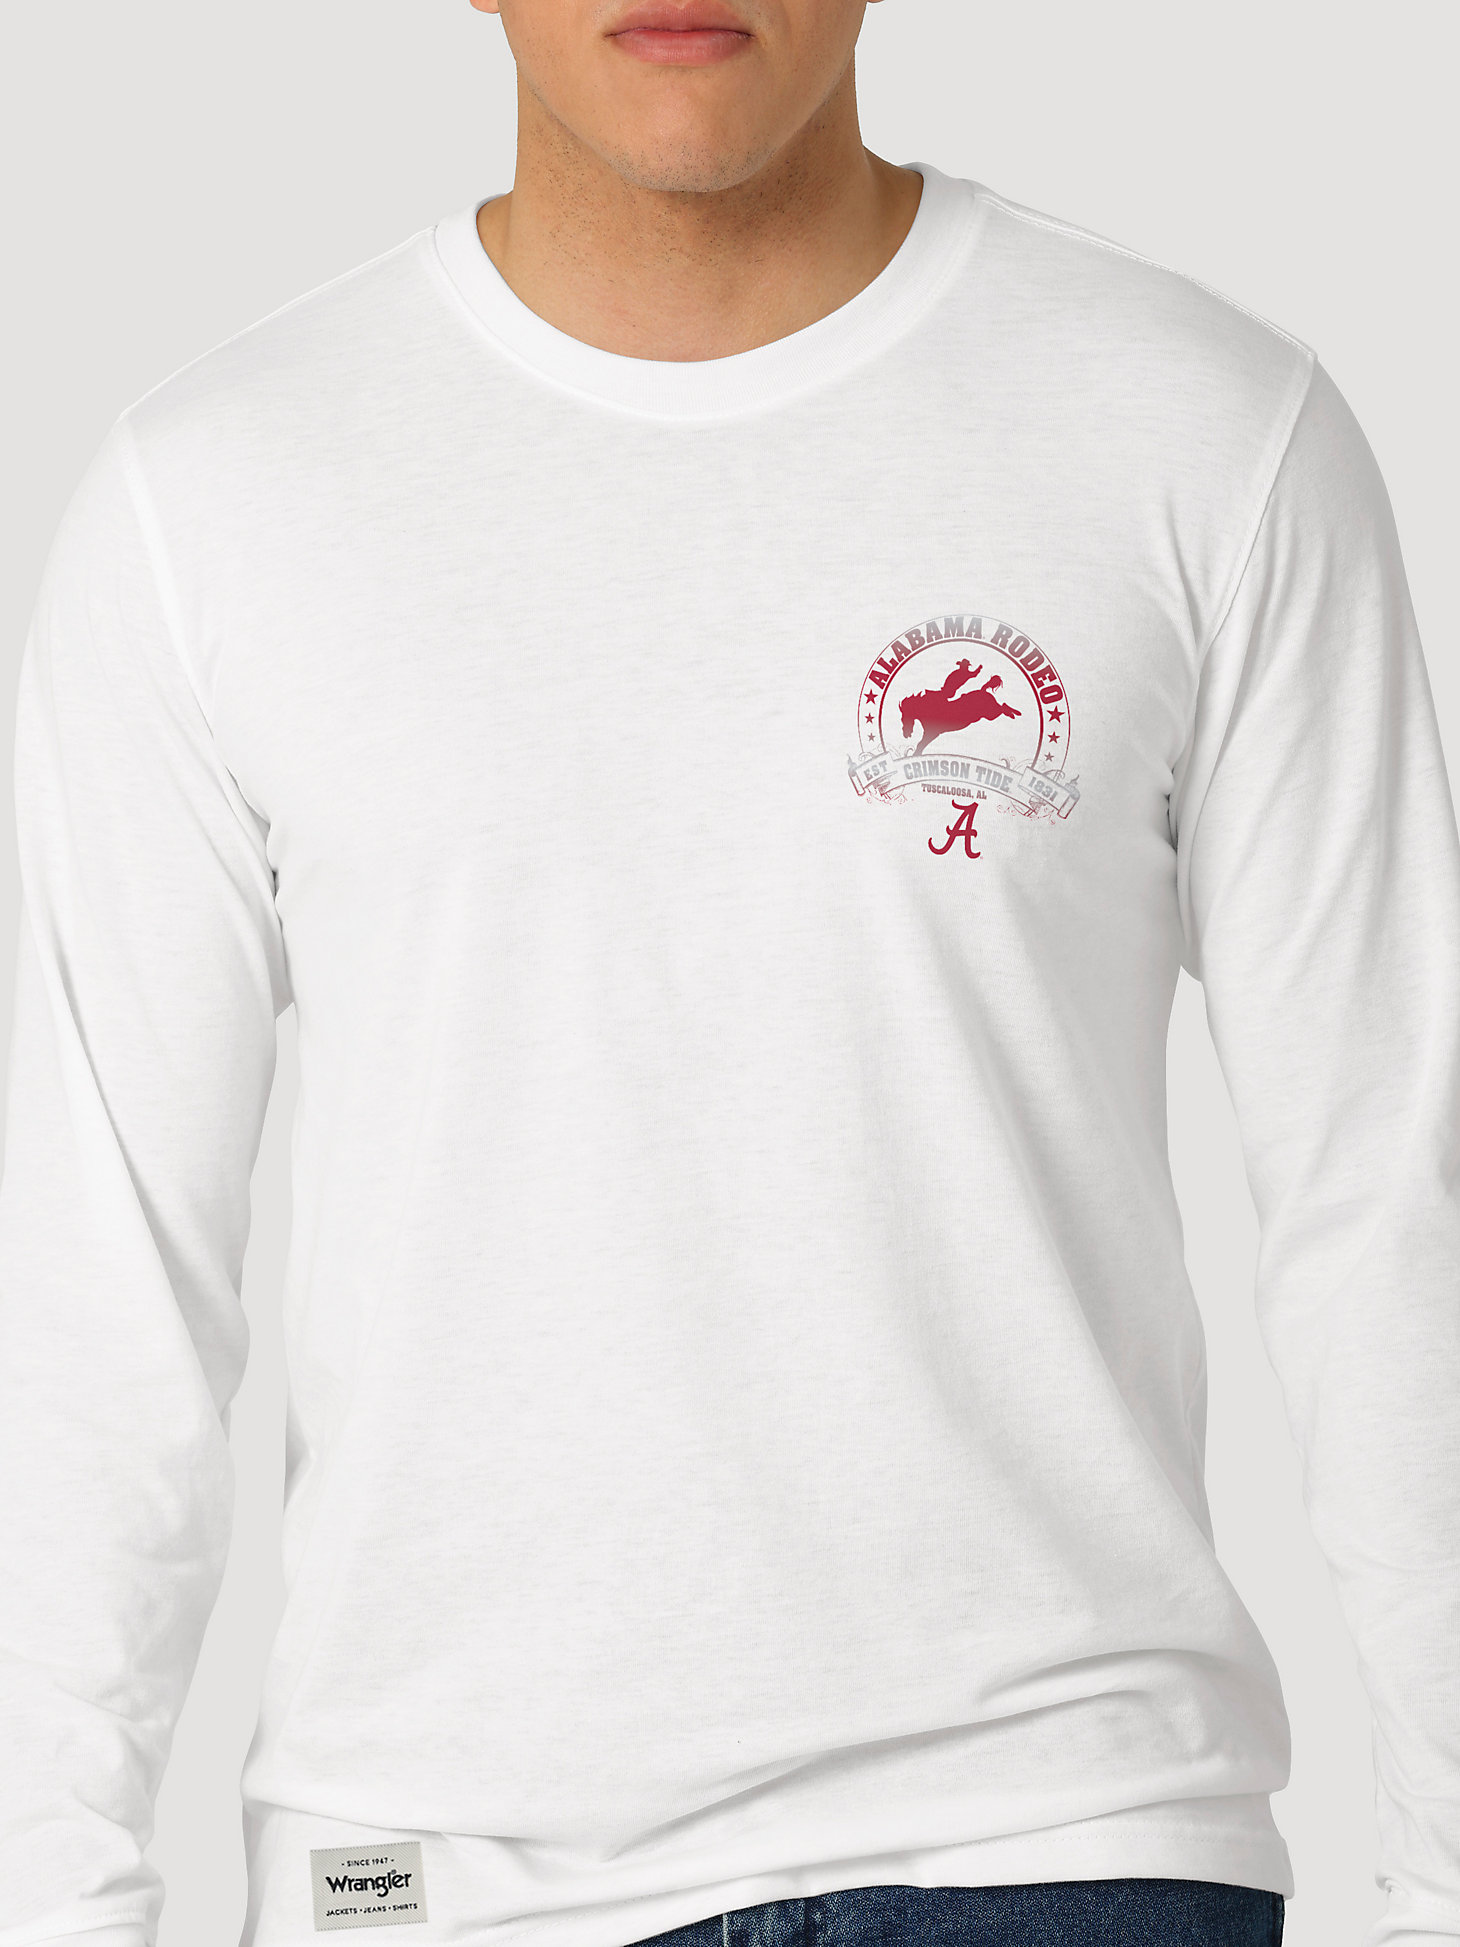 Wrangler Collegiate Rodeo Long Sleeve T-Shirt in University of Alabama alternative view 1